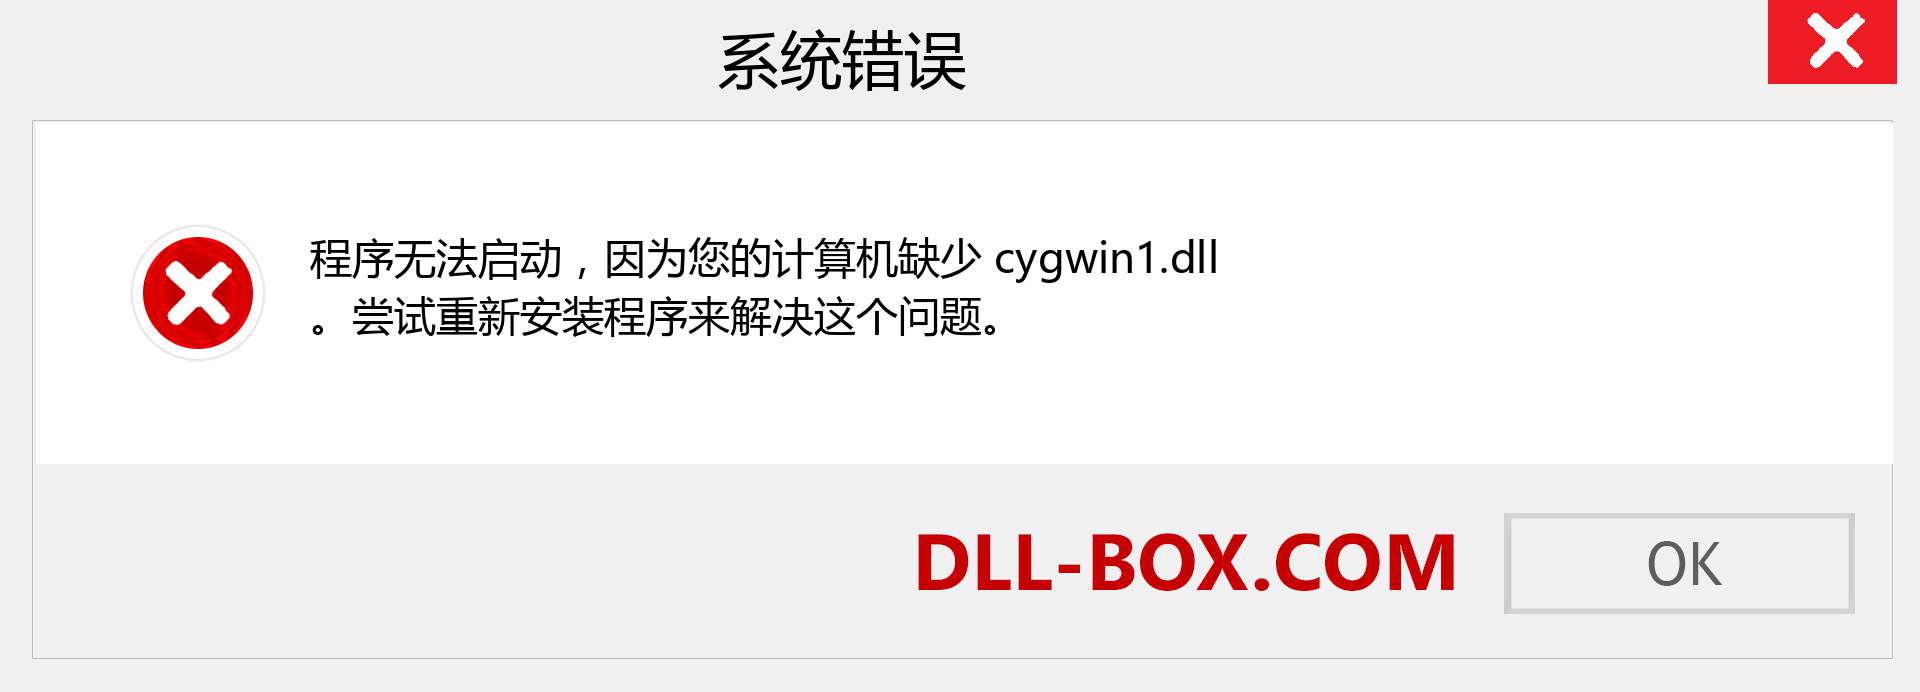 cygwin1.dll 文件丢失？。 适用于 Windows 7、8、10 的下载 - 修复 Windows、照片、图像上的 cygwin1 dll 丢失错误